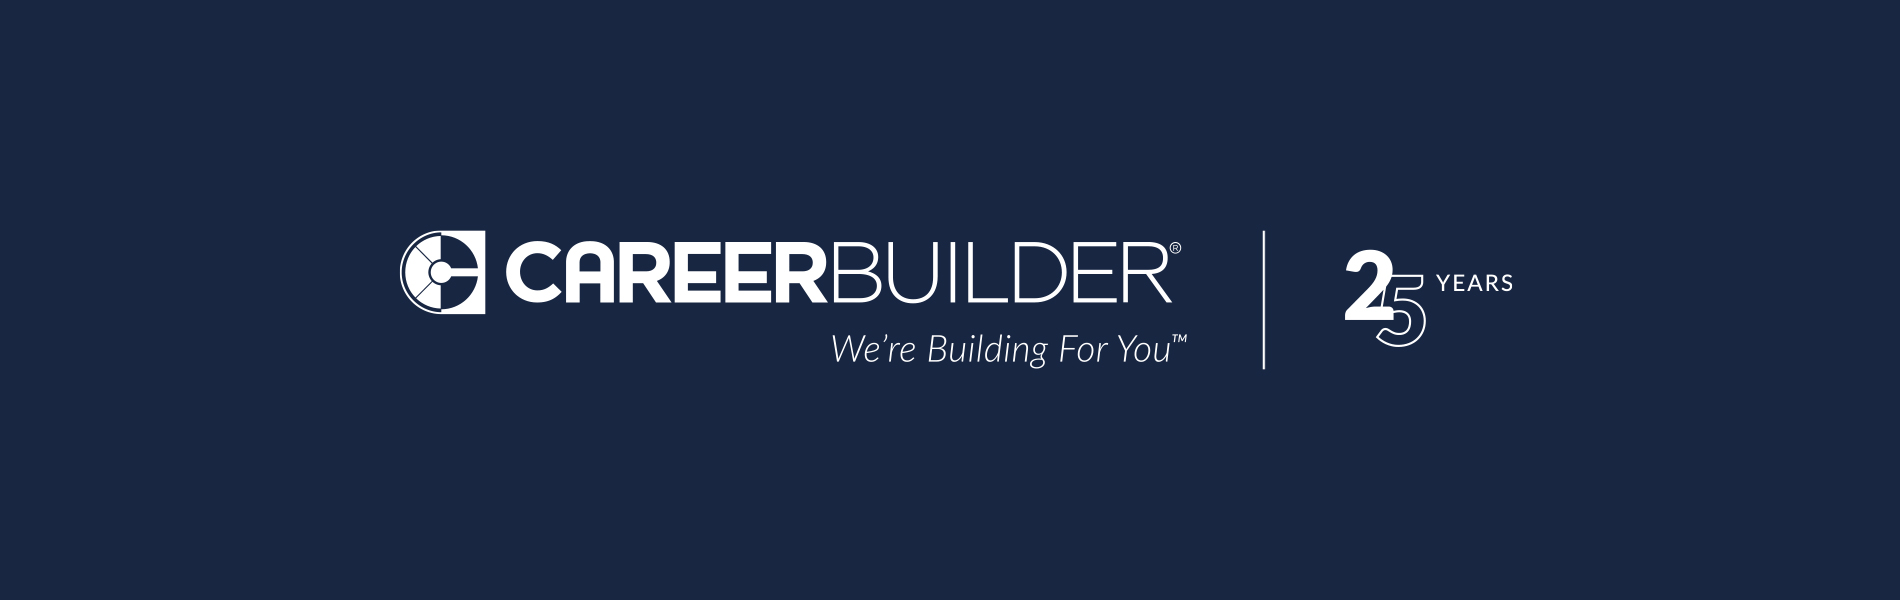 CareerBuilder banner